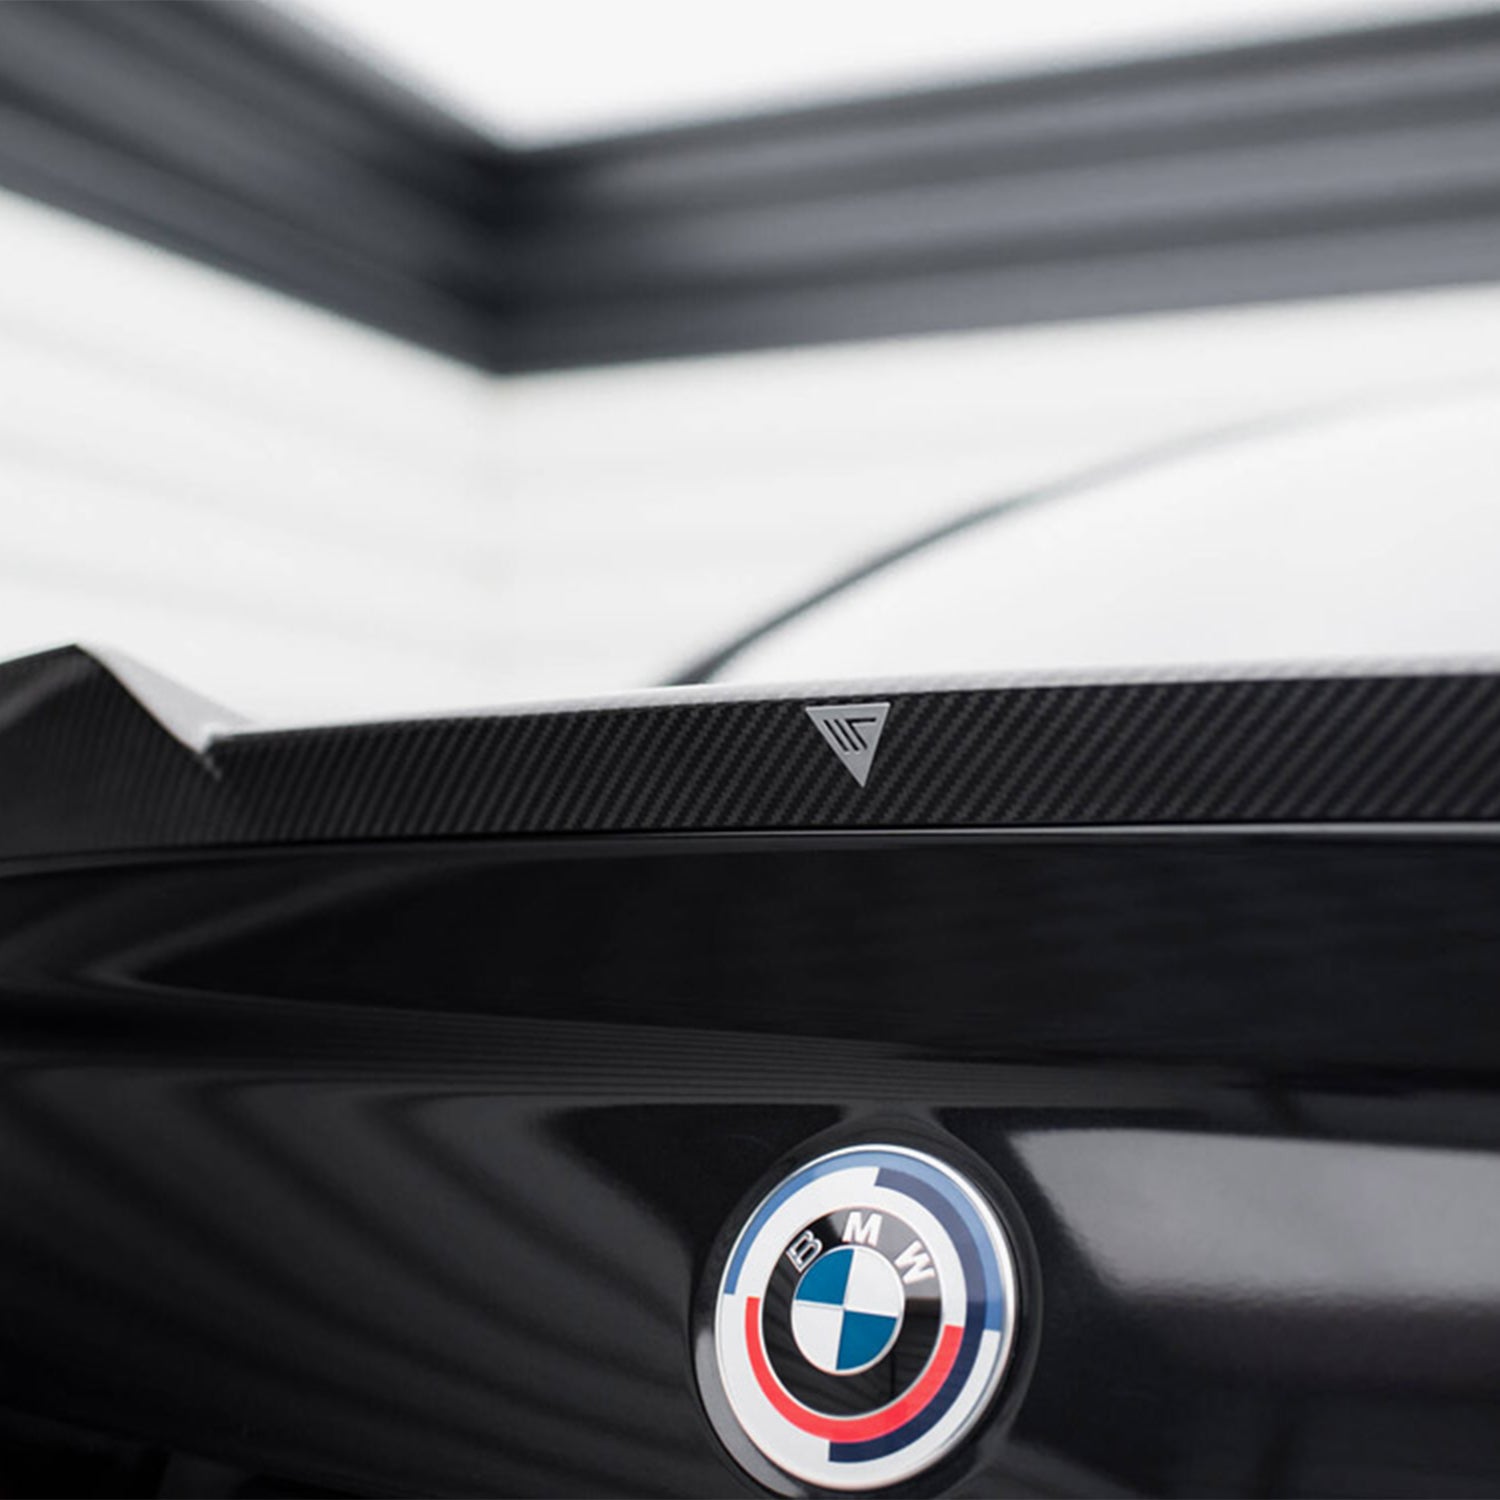 Maxton Design BMW G87 M2 Gloss Carbon Fibre Rear Ducktail Spoiler Lip